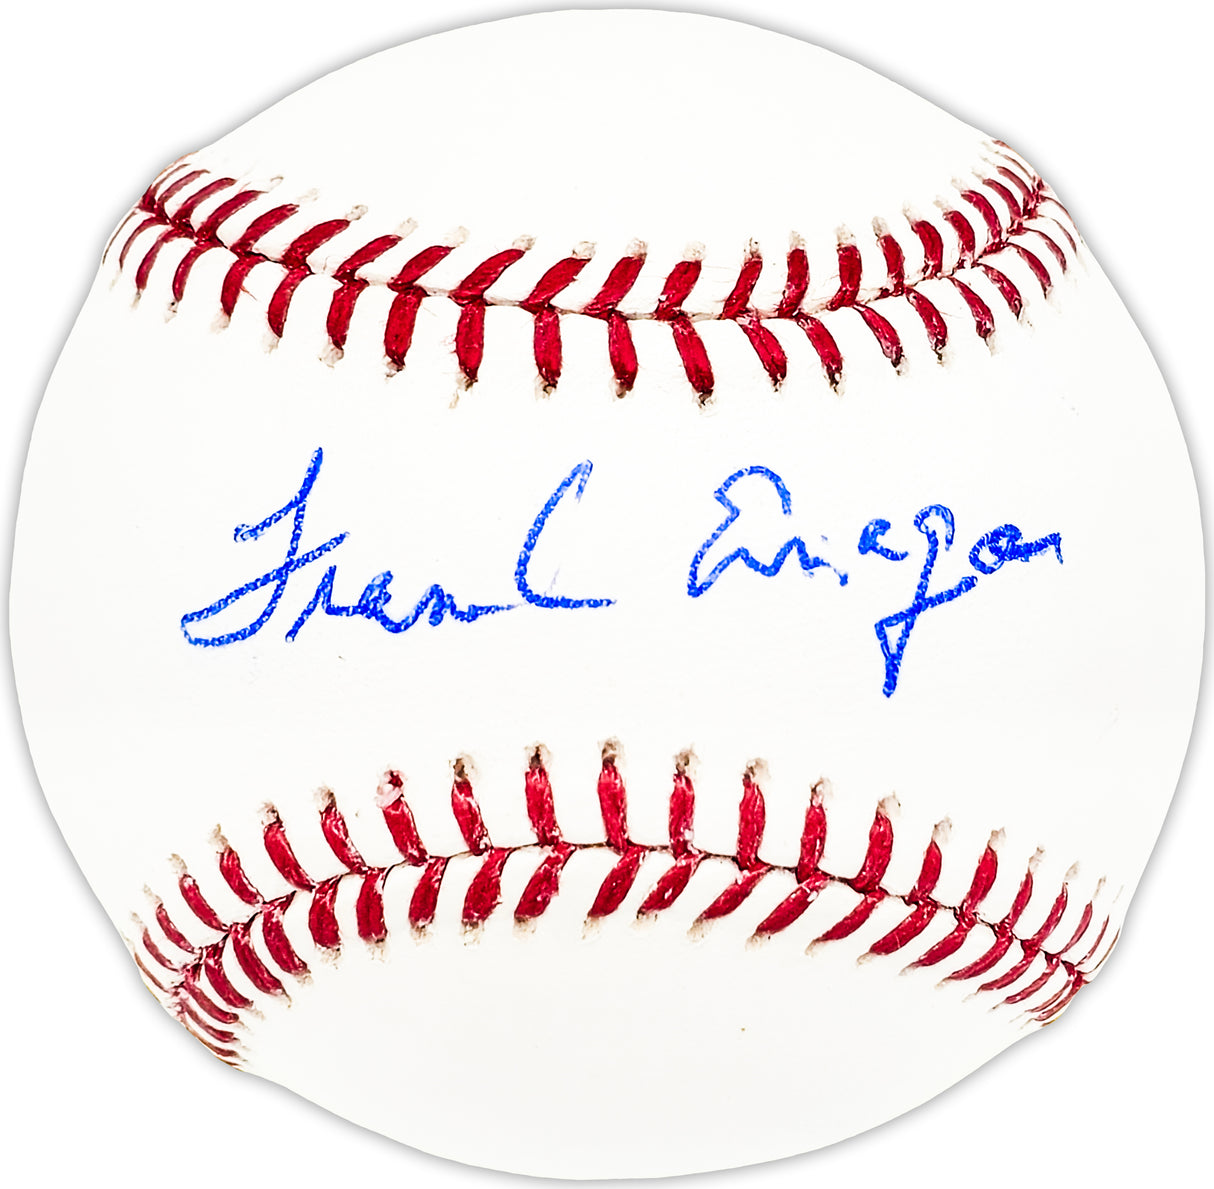 Frank Ernaga Autographed Official MLB Baseball Chicago Cubs Beckett BAS QR #BM25532